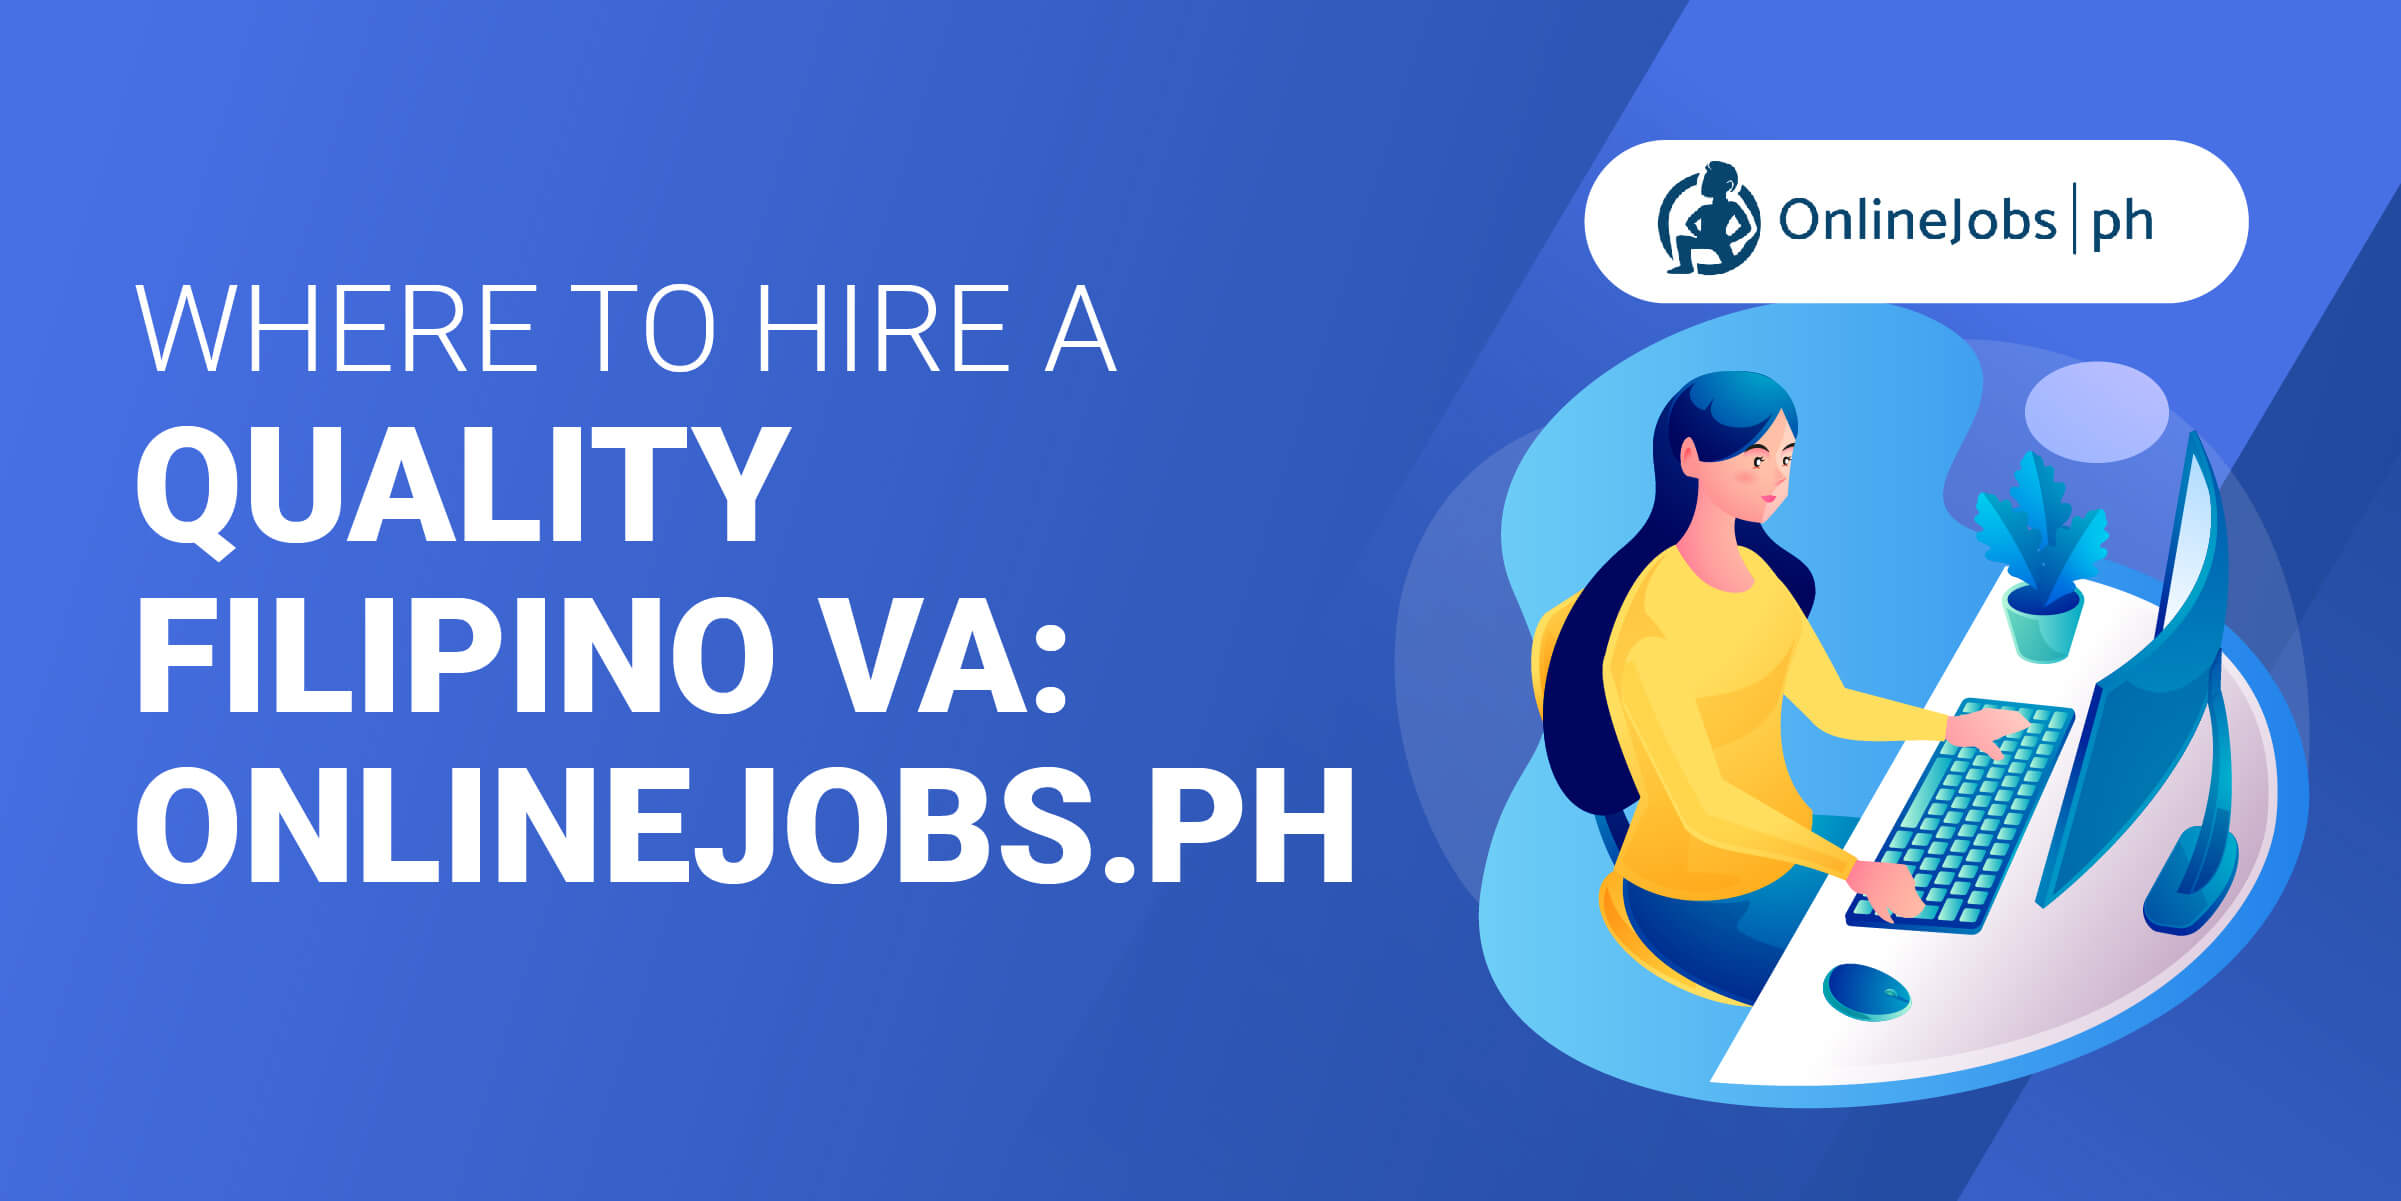 Where to Hire Quality Filipino VAs